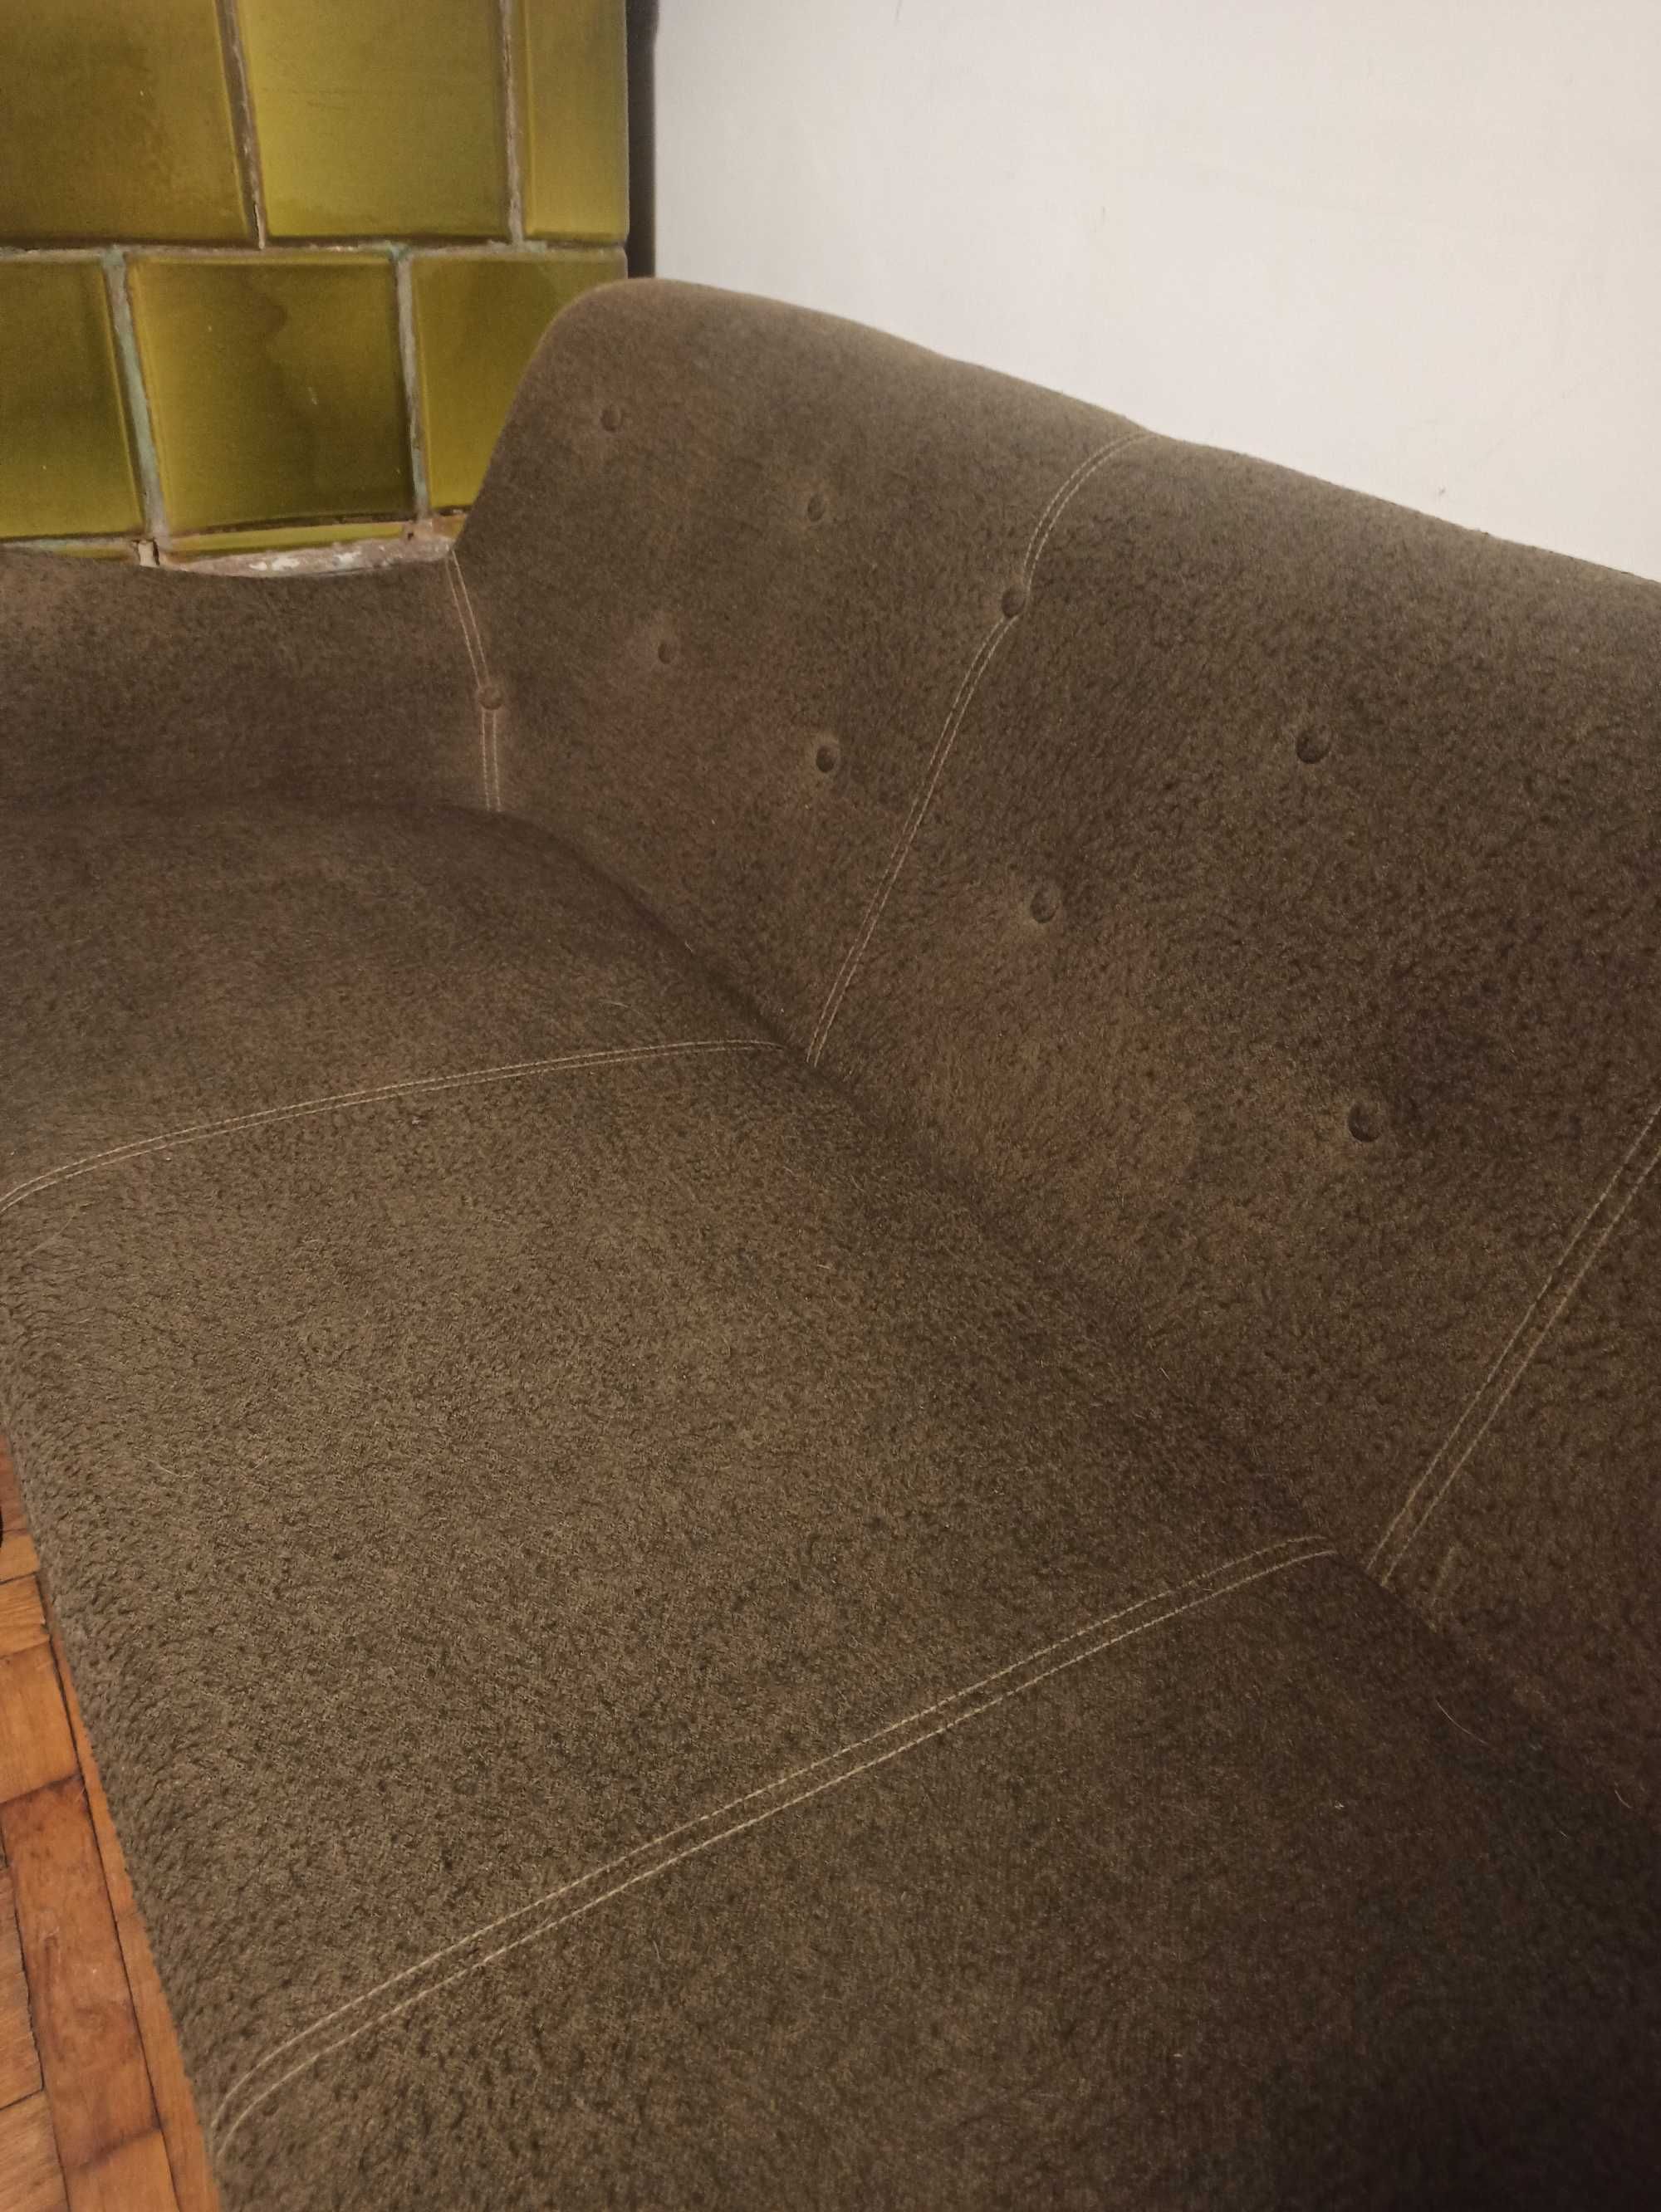 piękna sofa SofaCompany model Hermann,180 x 80cm, niedostępna w Polsce